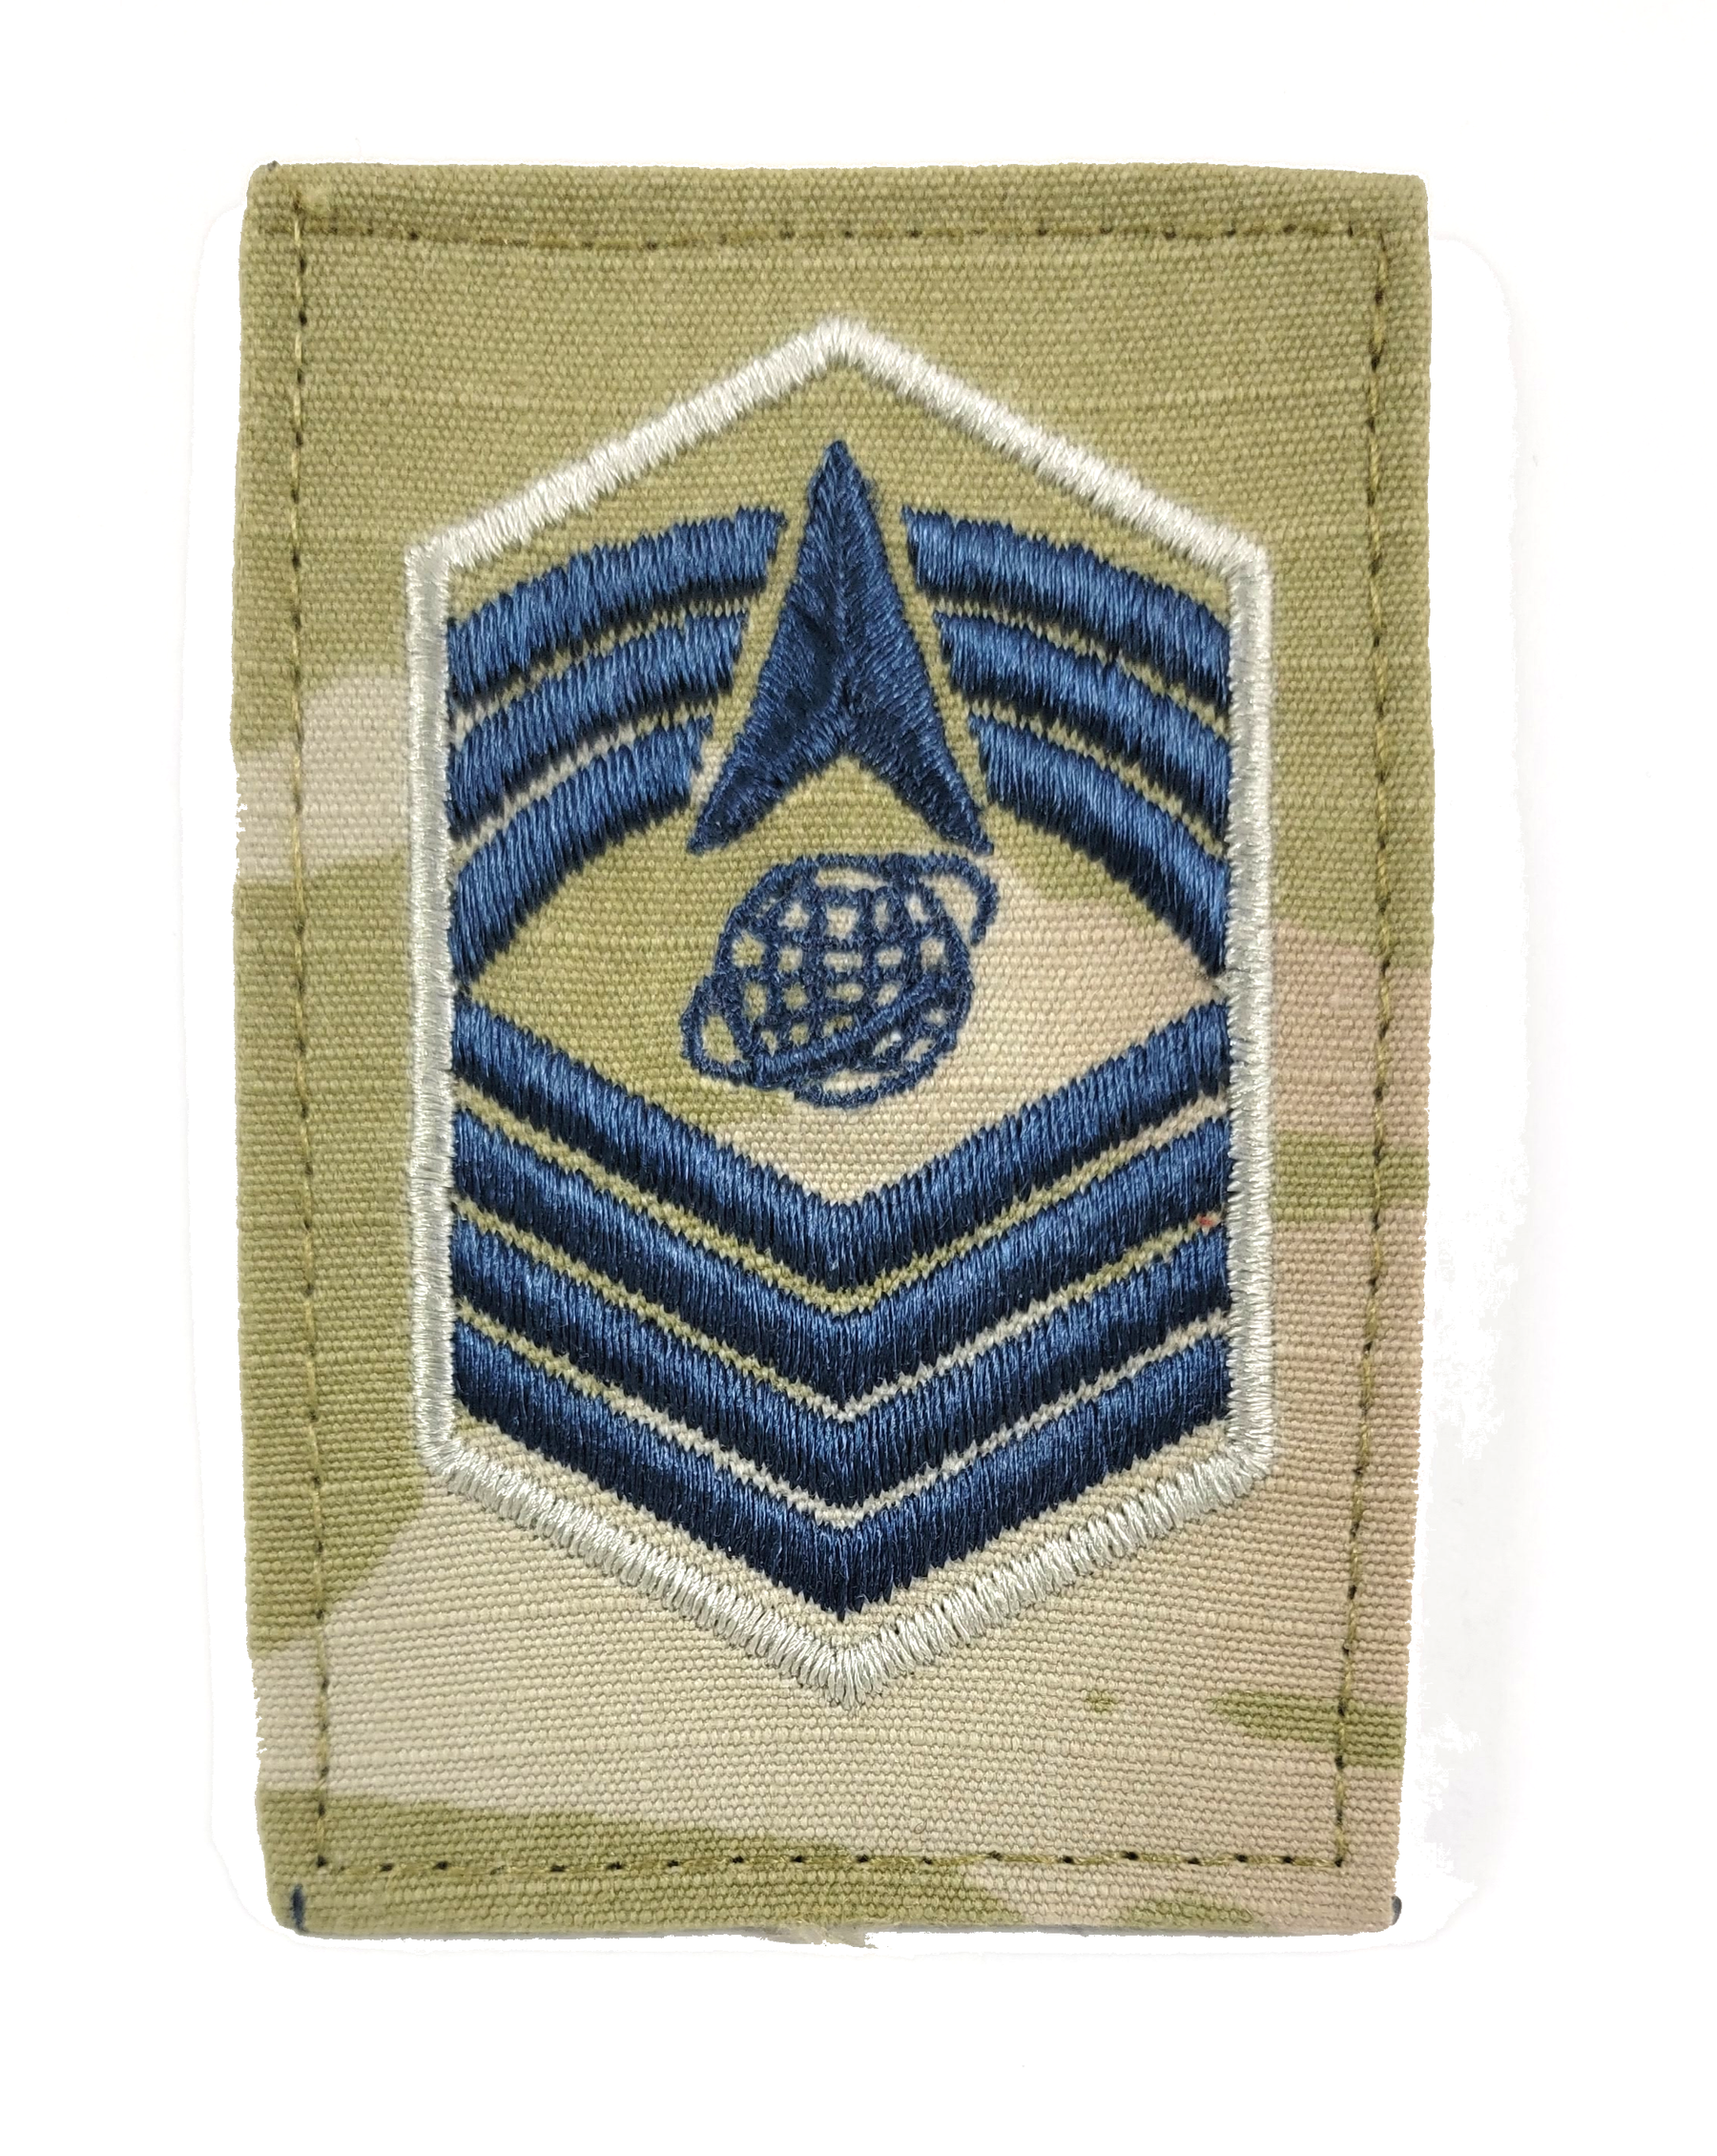 U.S. Space Force OCP Rank Chief Master Sergeant